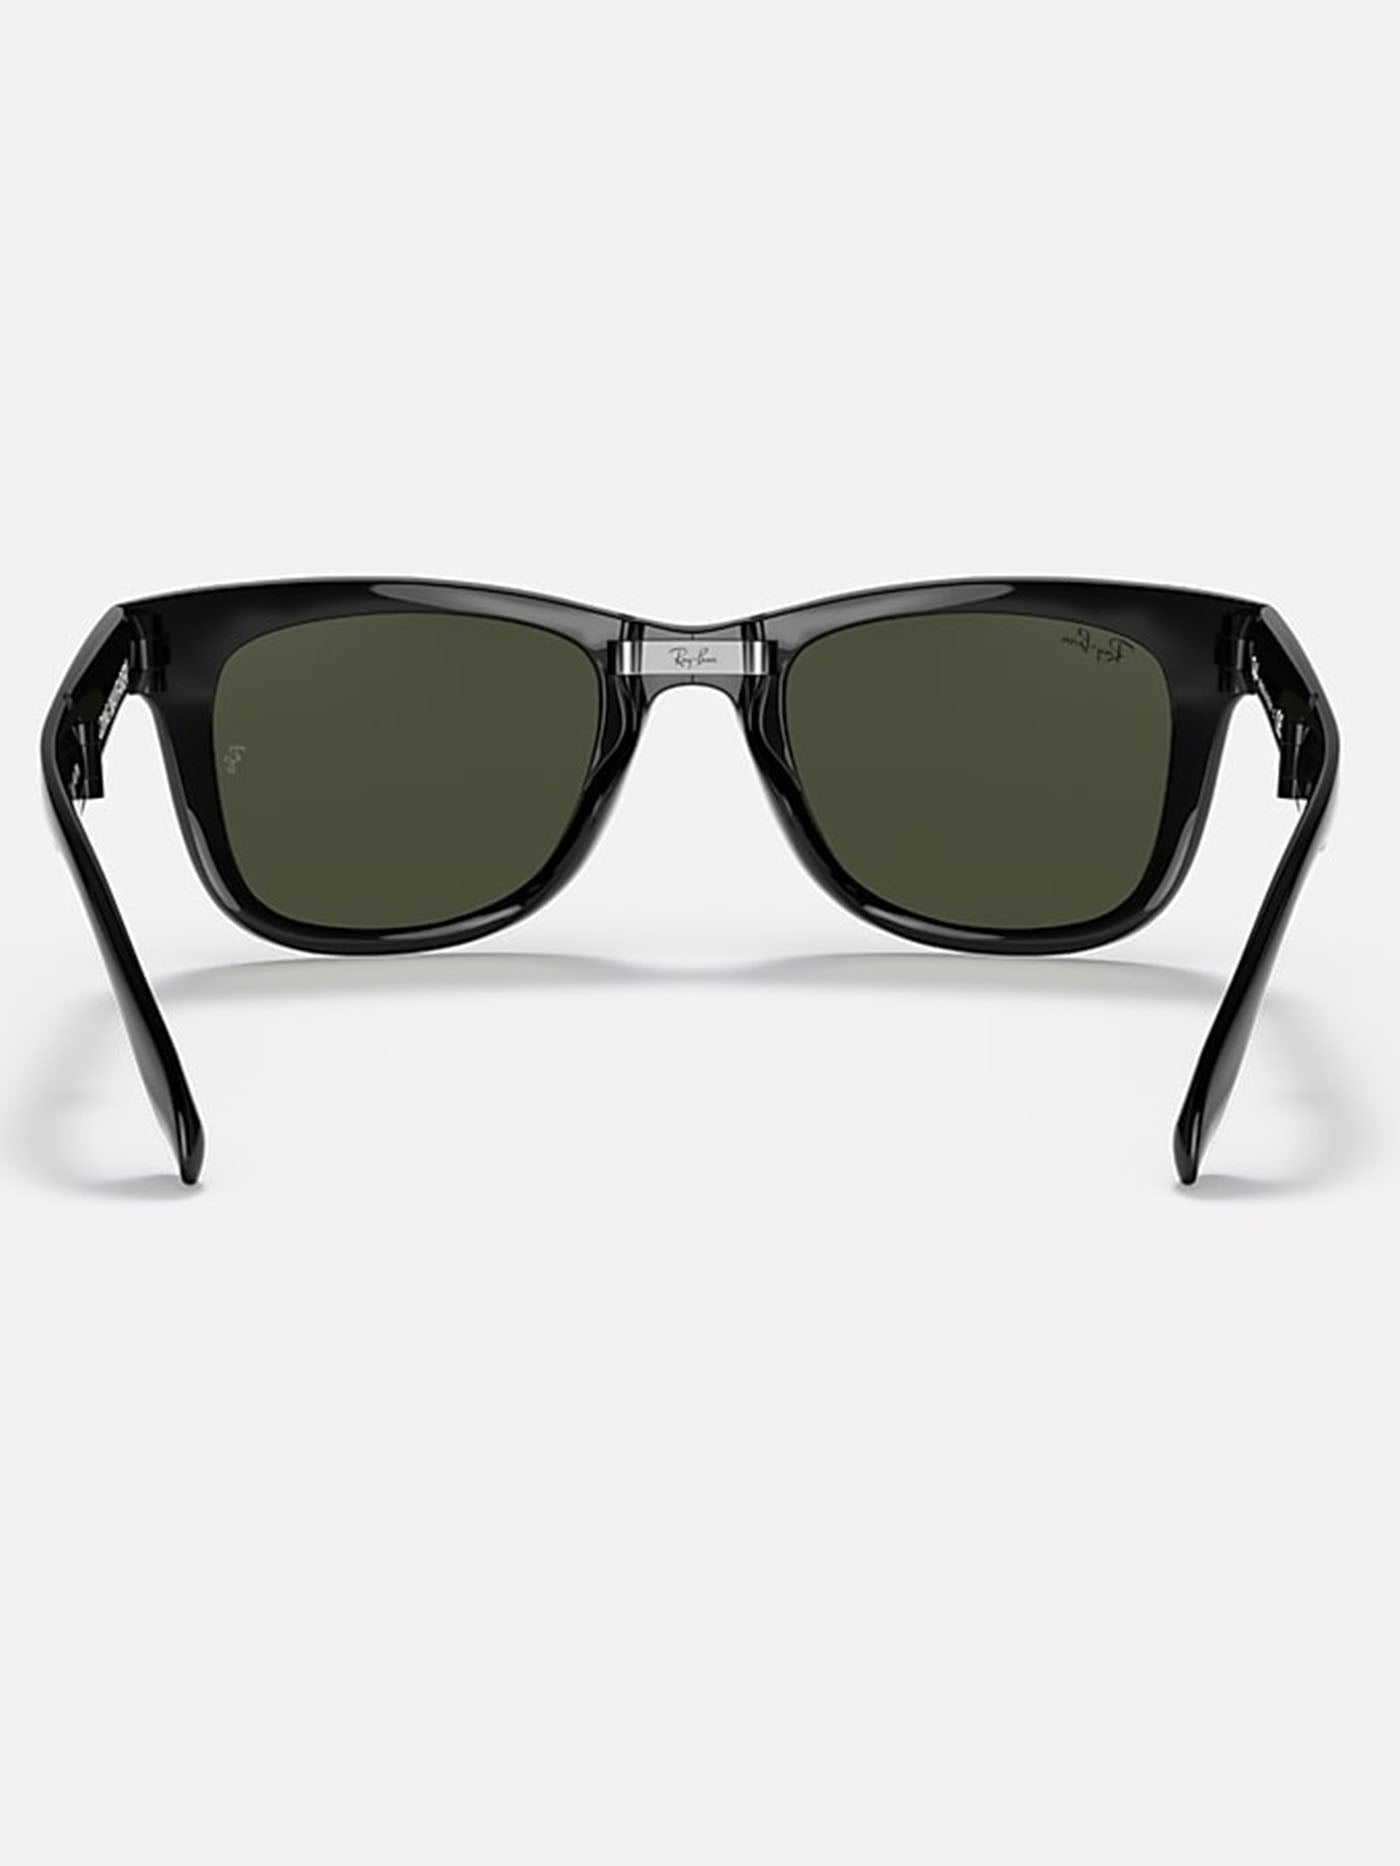 Ray Ban 2024 Wayfarer Folding Black/Green Classic  G-15 Sunglasses